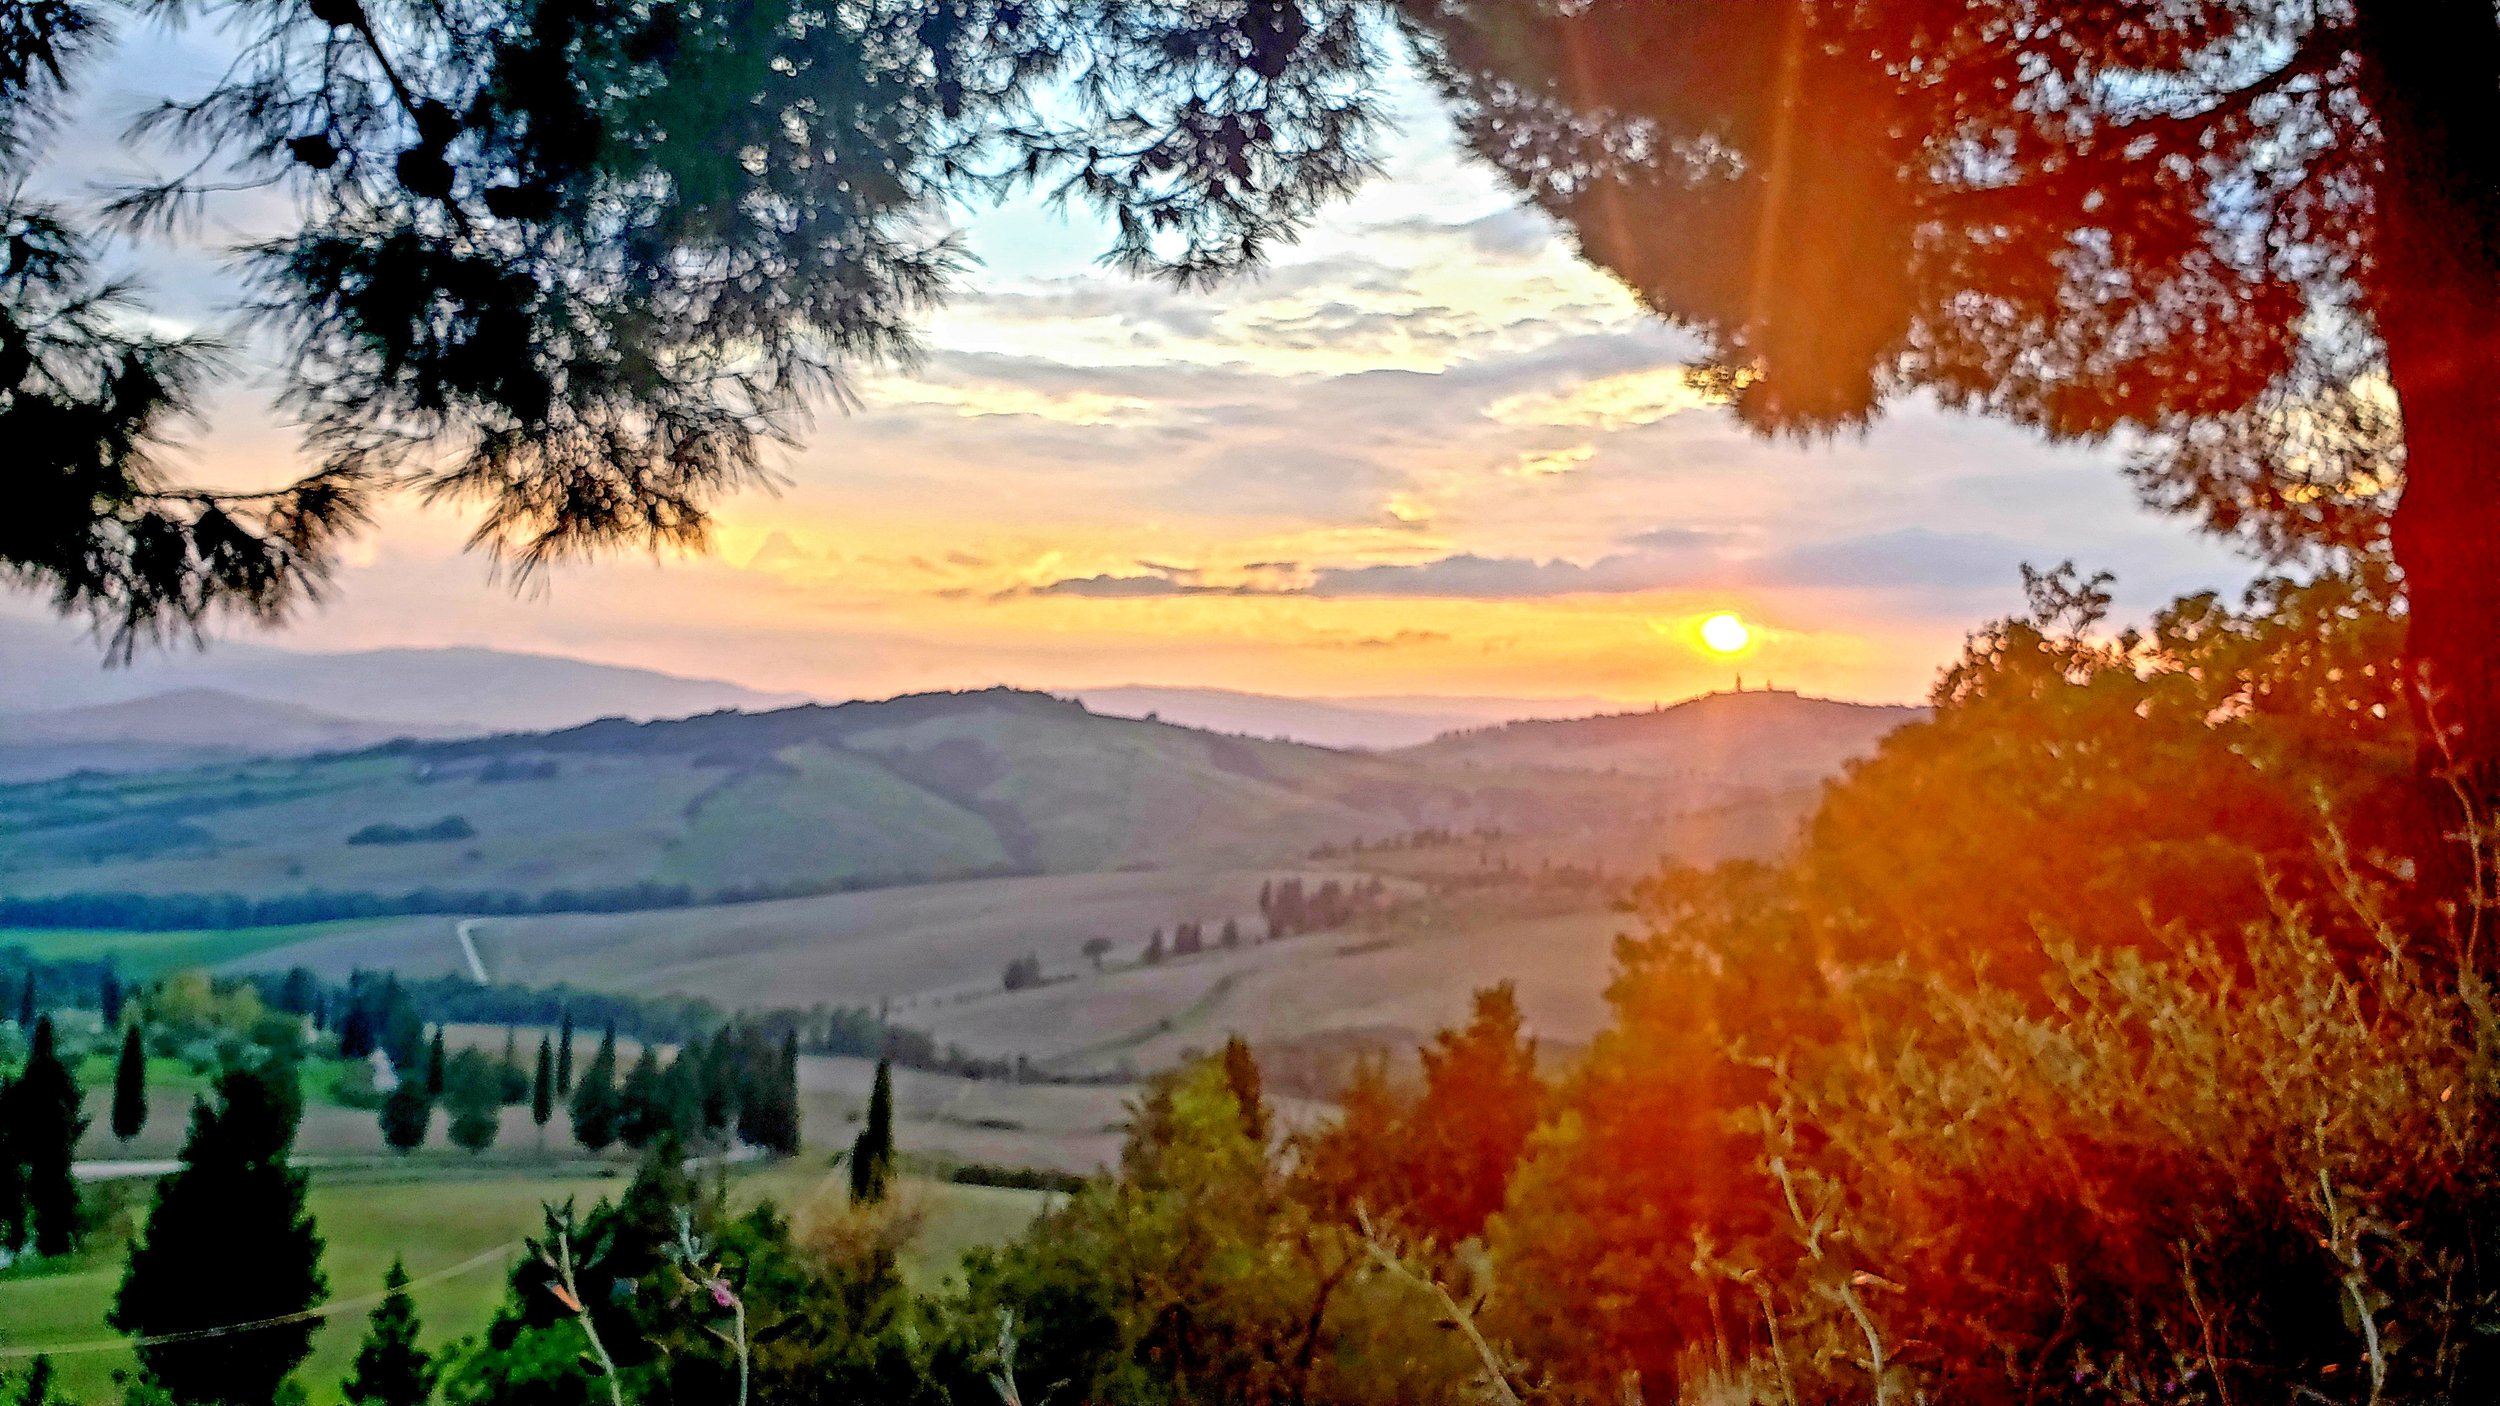 *Sunrise from Montepulciano